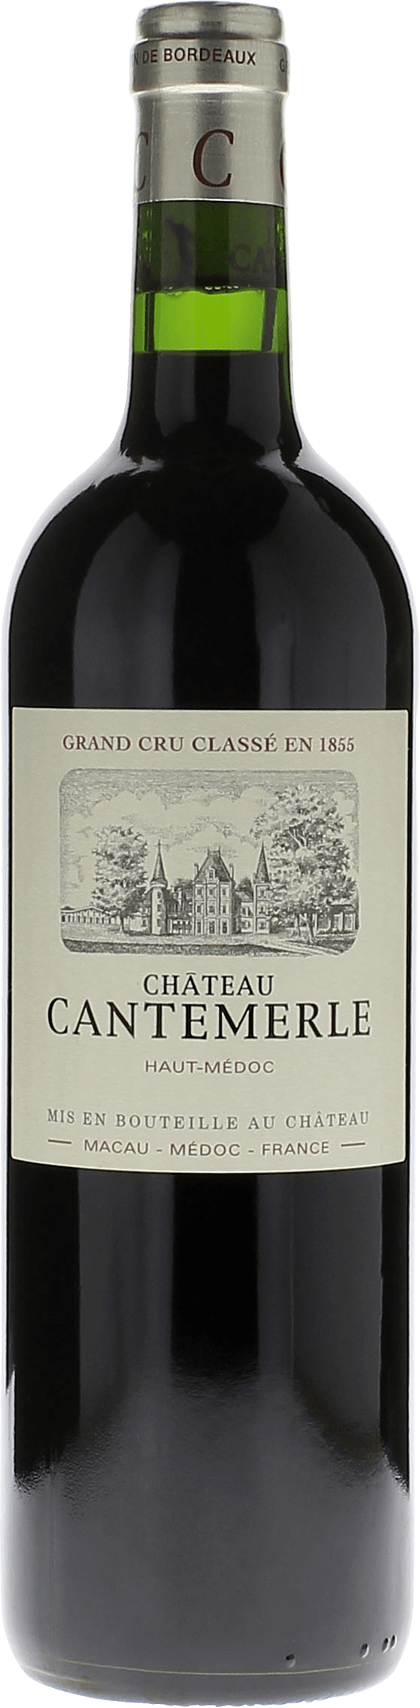 Cantemerle 1996 5me Grand cru class Mdoc, Bordeaux rouge